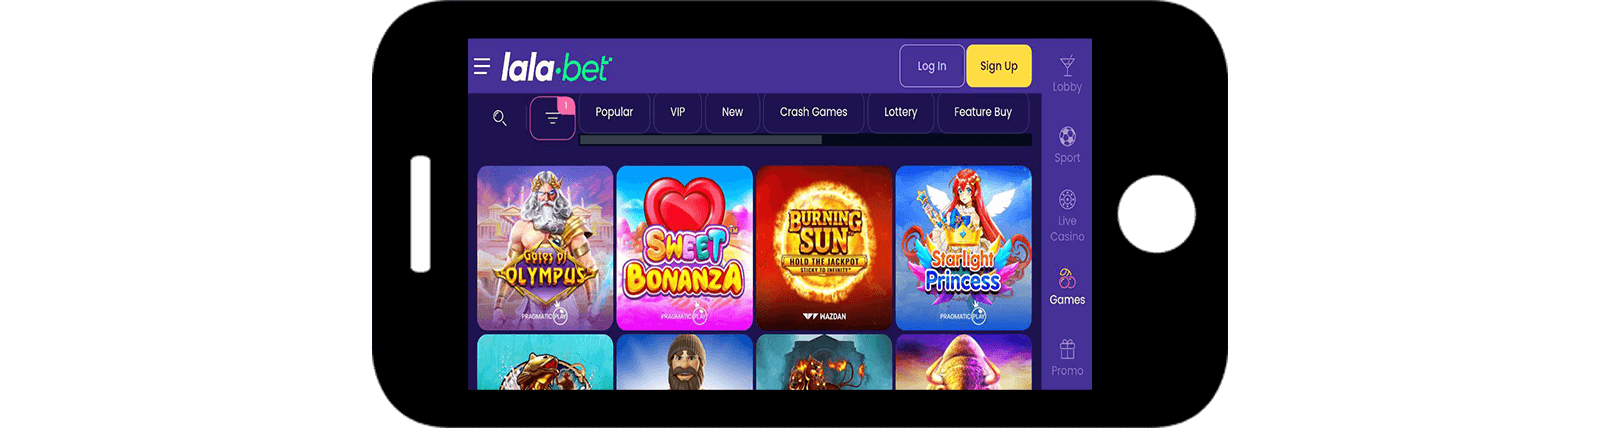 TOFCasino.com   Online Casinos met Mobile Slots LaLaBet